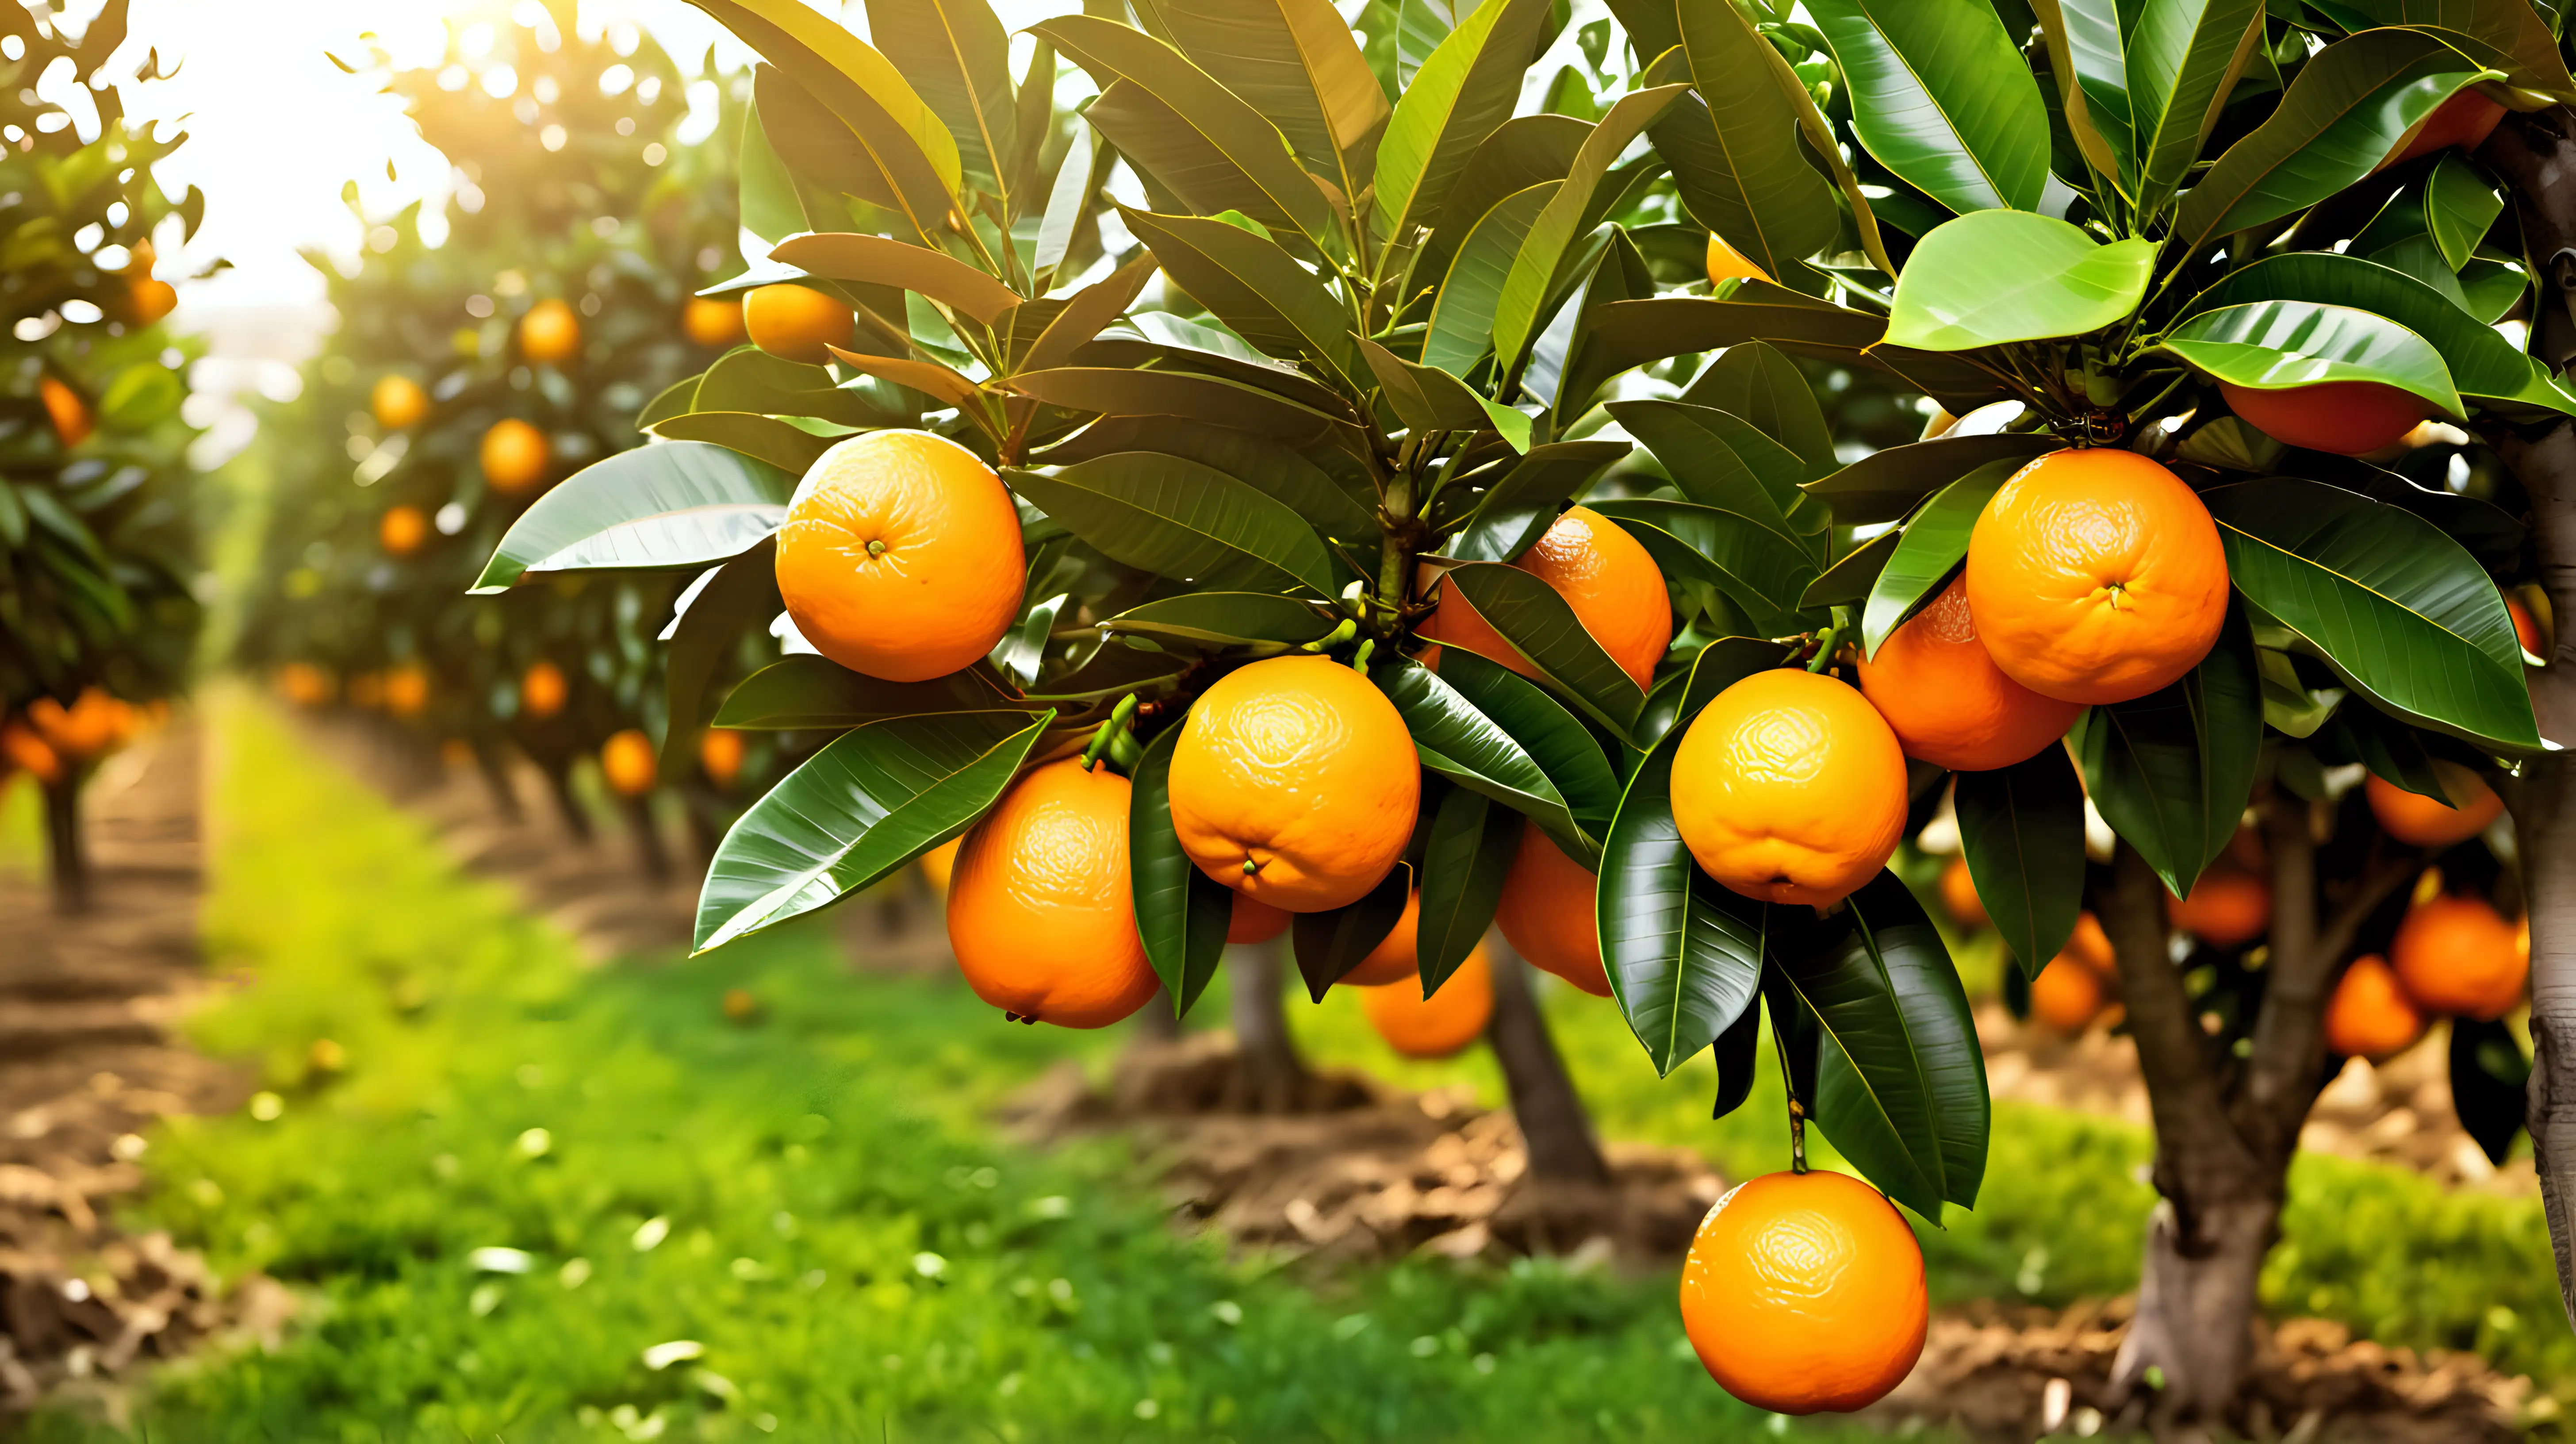 Vibrant Closeup of Ripe Oranges in a Lush Orchard